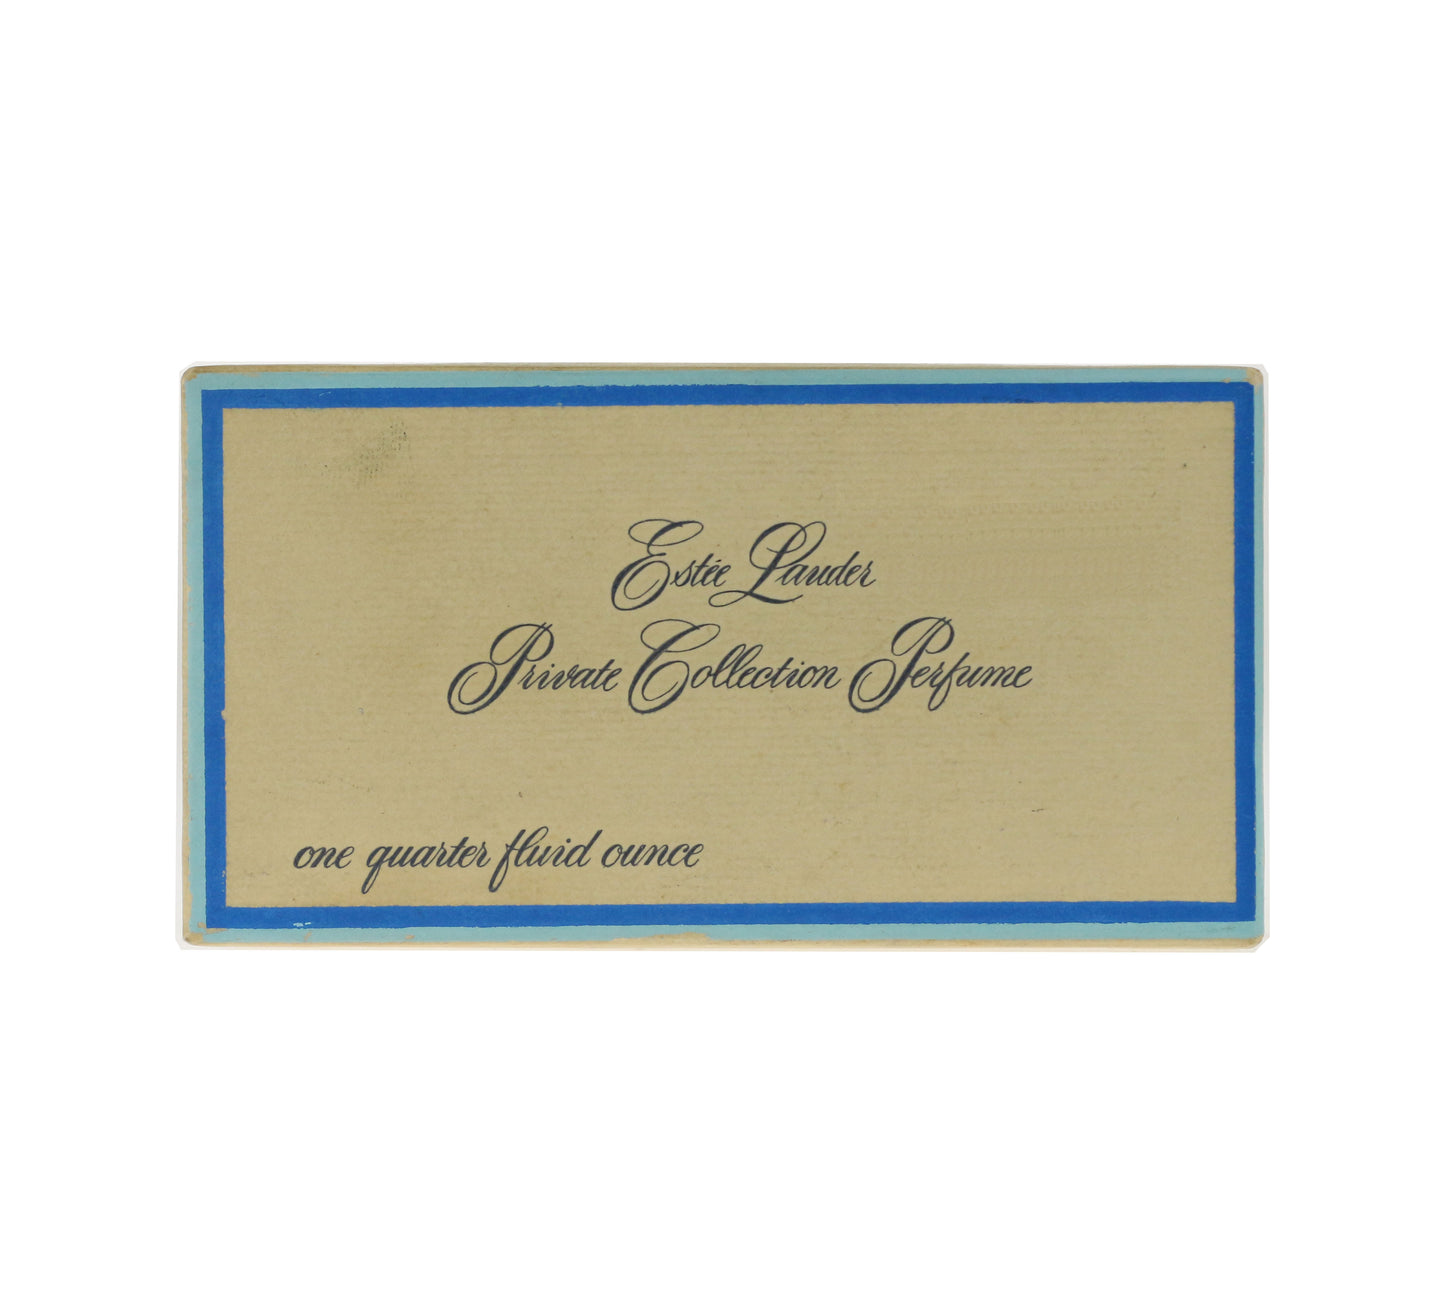 Estee Lauder Private Collection Perfume One Quarter Fluid Ounce(0.25oz)New InBox